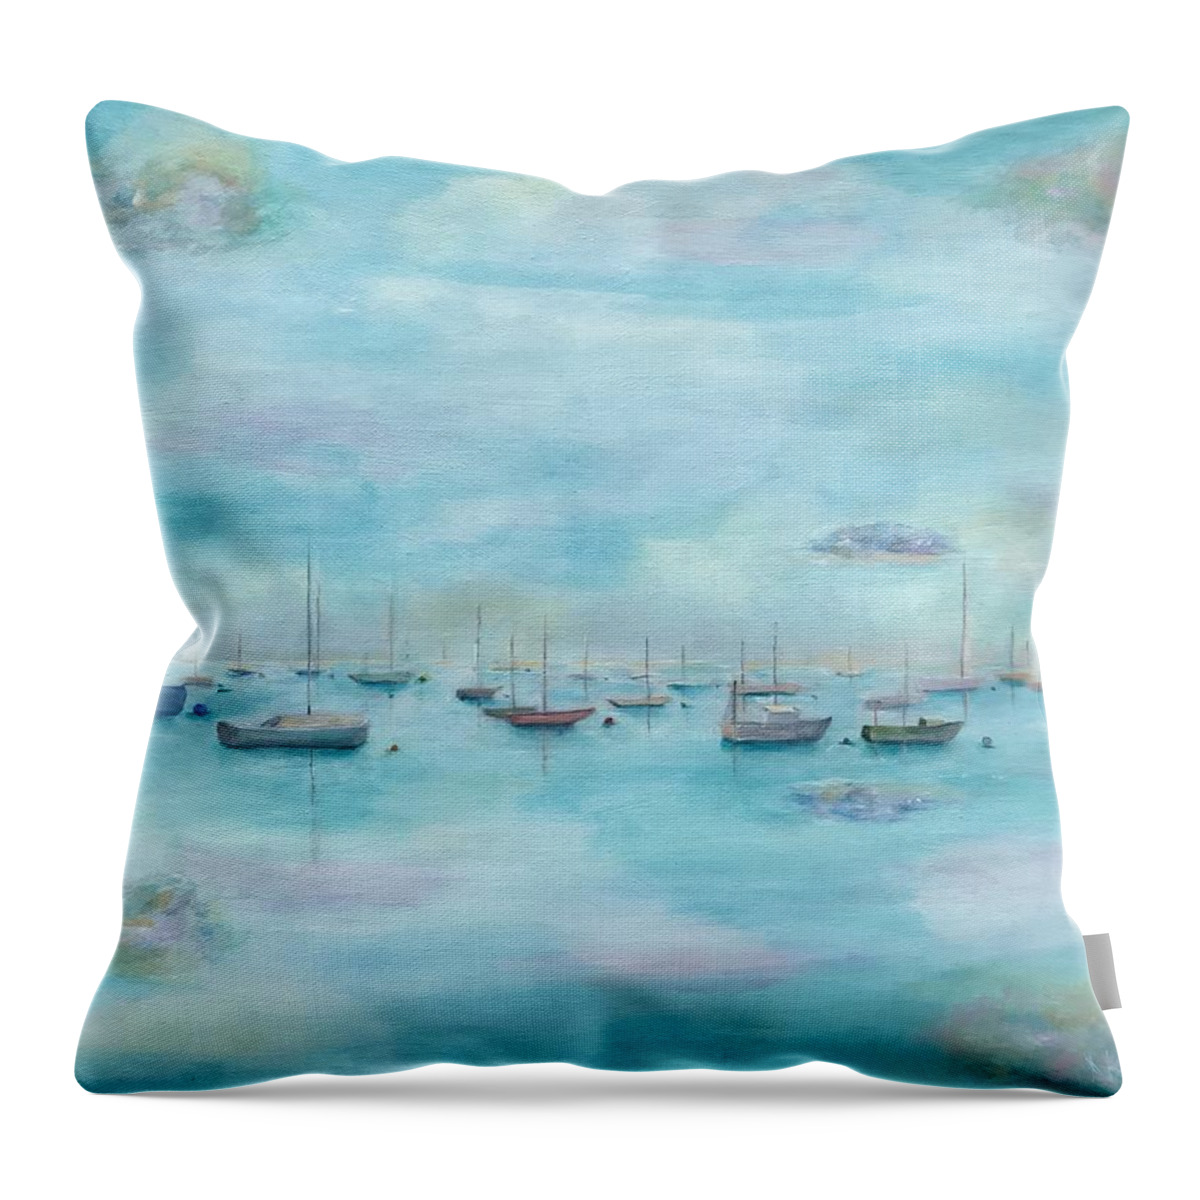 Seas Throw Pillow featuring the painting Celestial Seas by Deborah Naves